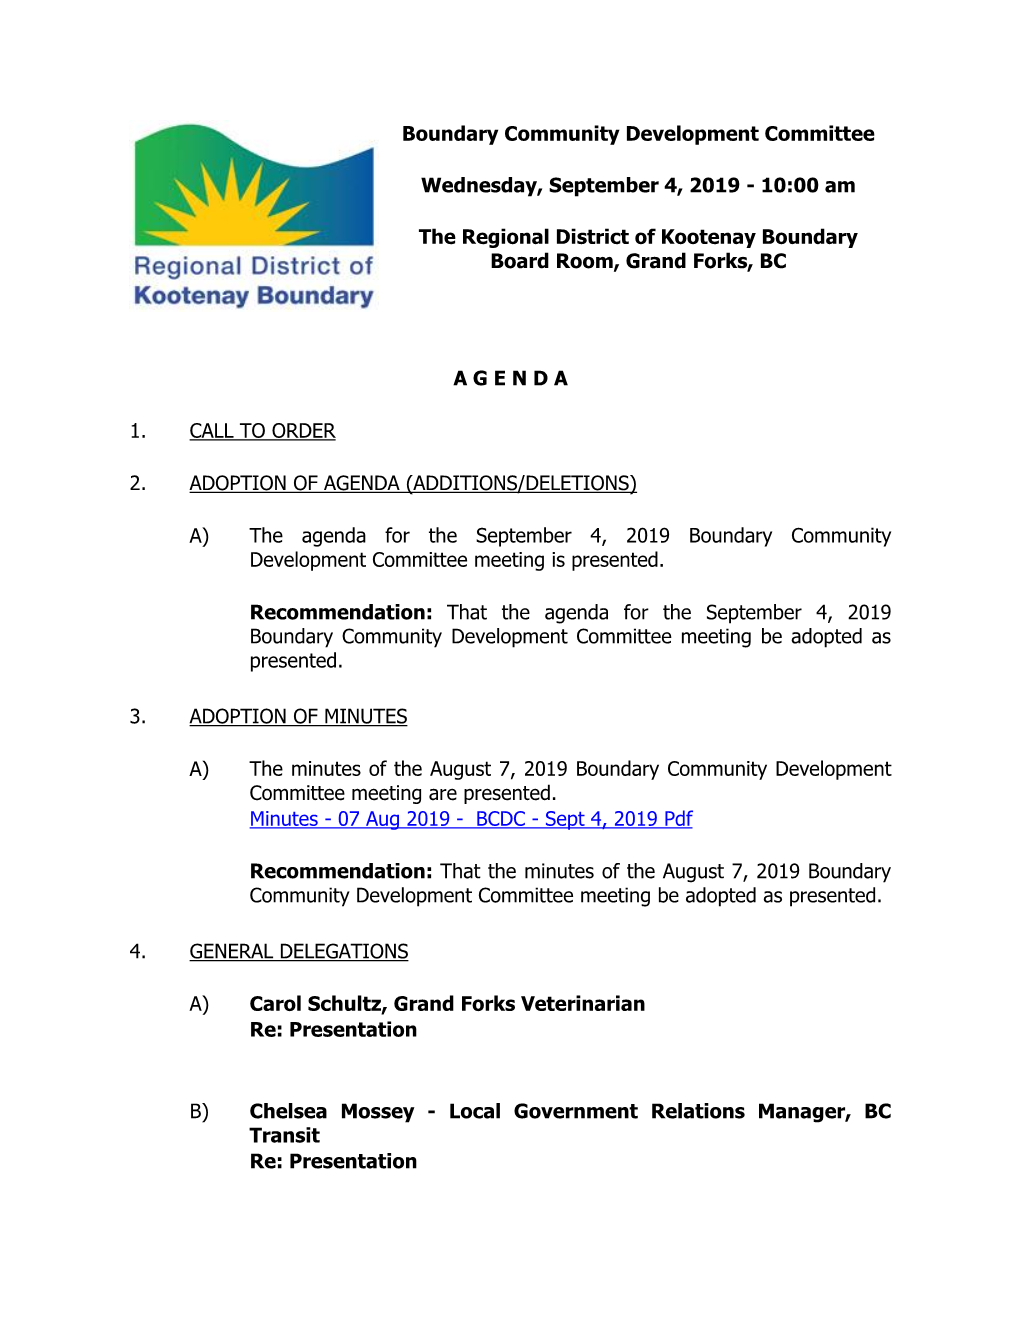 Boundary Community Development Committee Wednesday, September